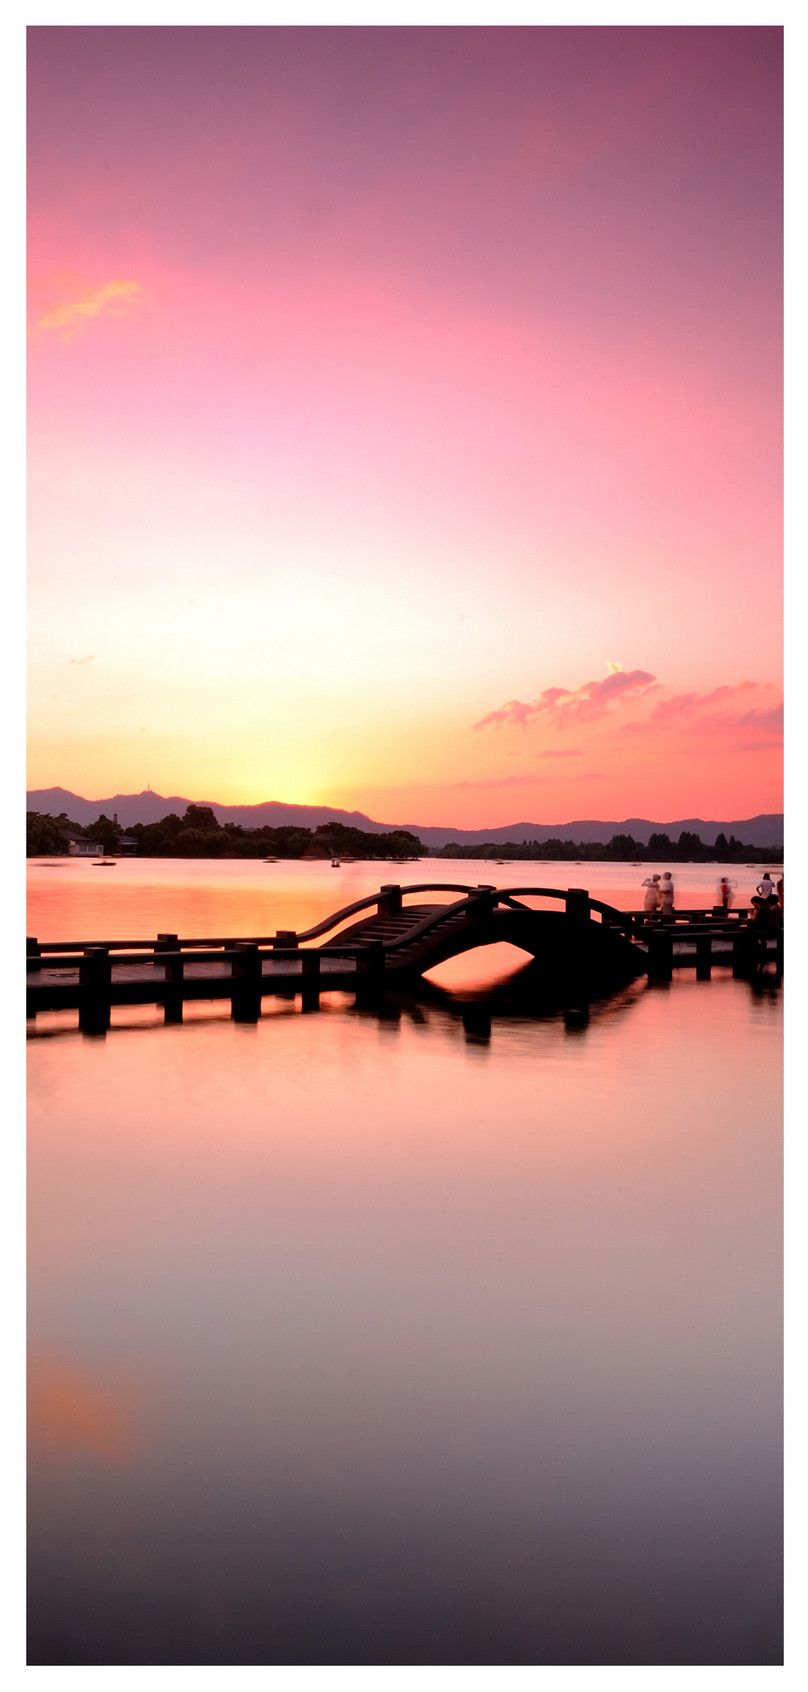 hangzhou west lake long bridge mobile wallpaper background image